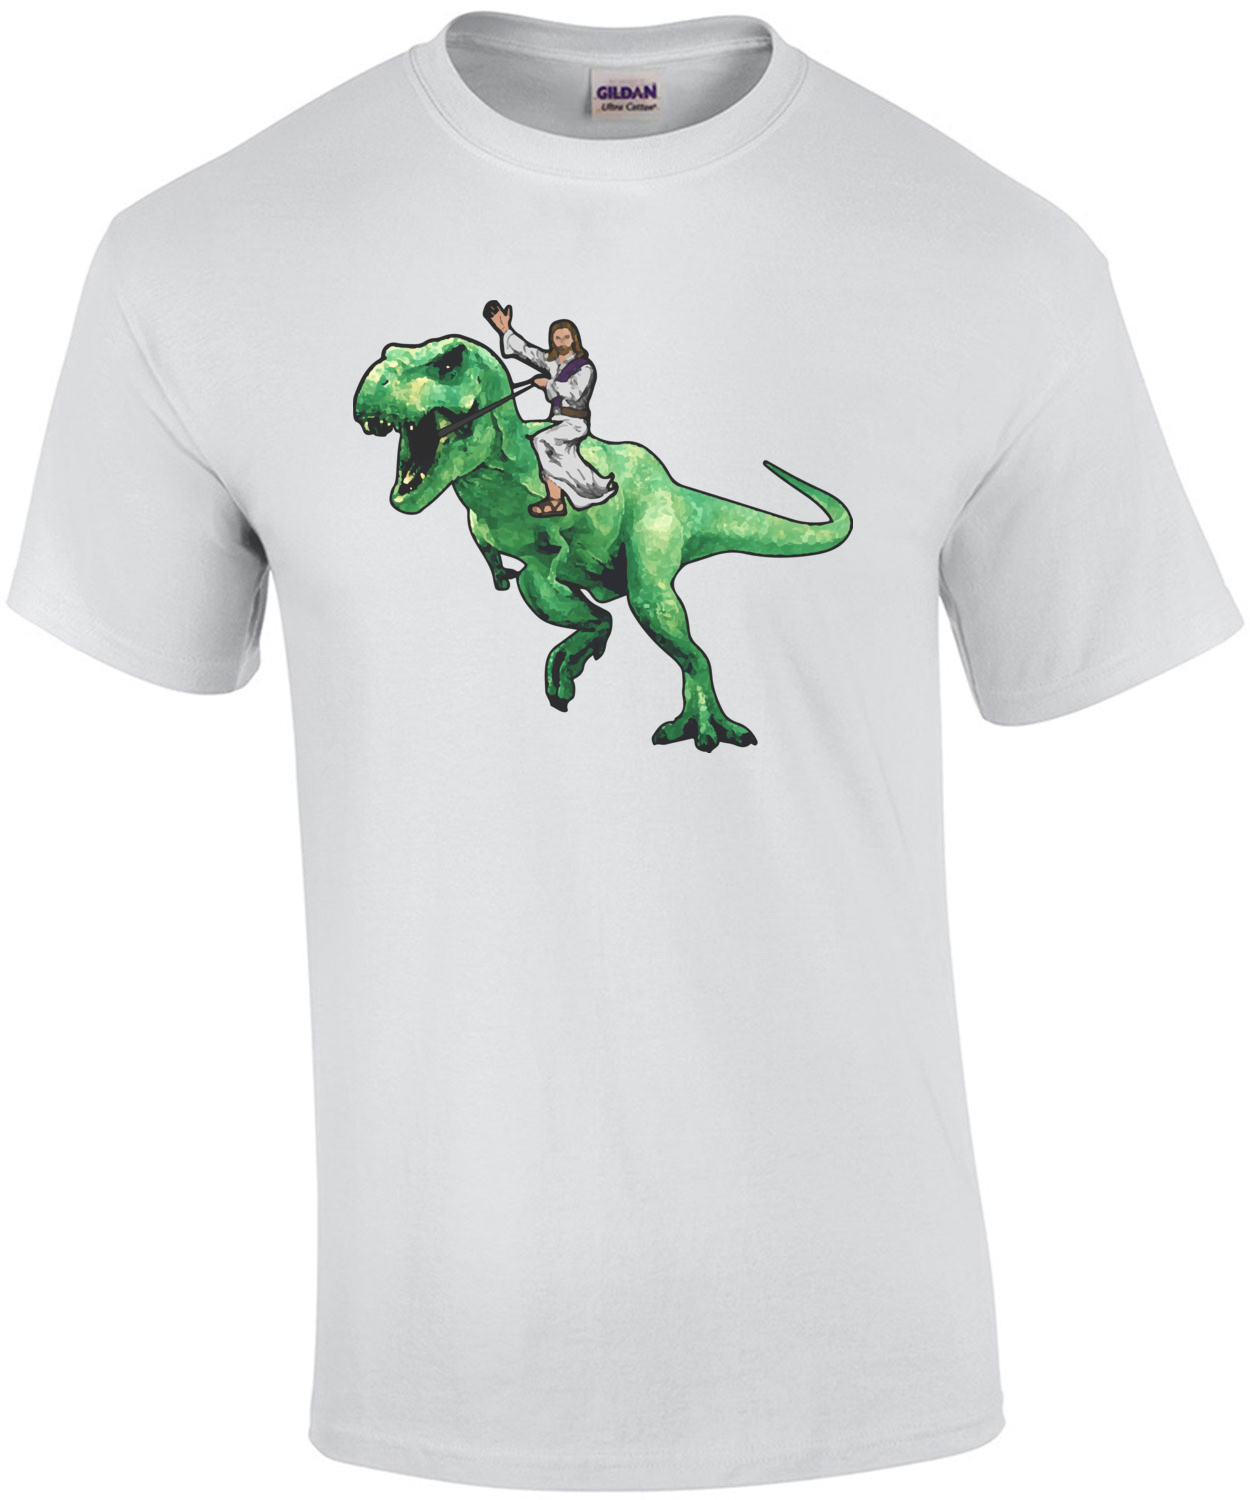 Jesus riding a dinosaur t-shirt